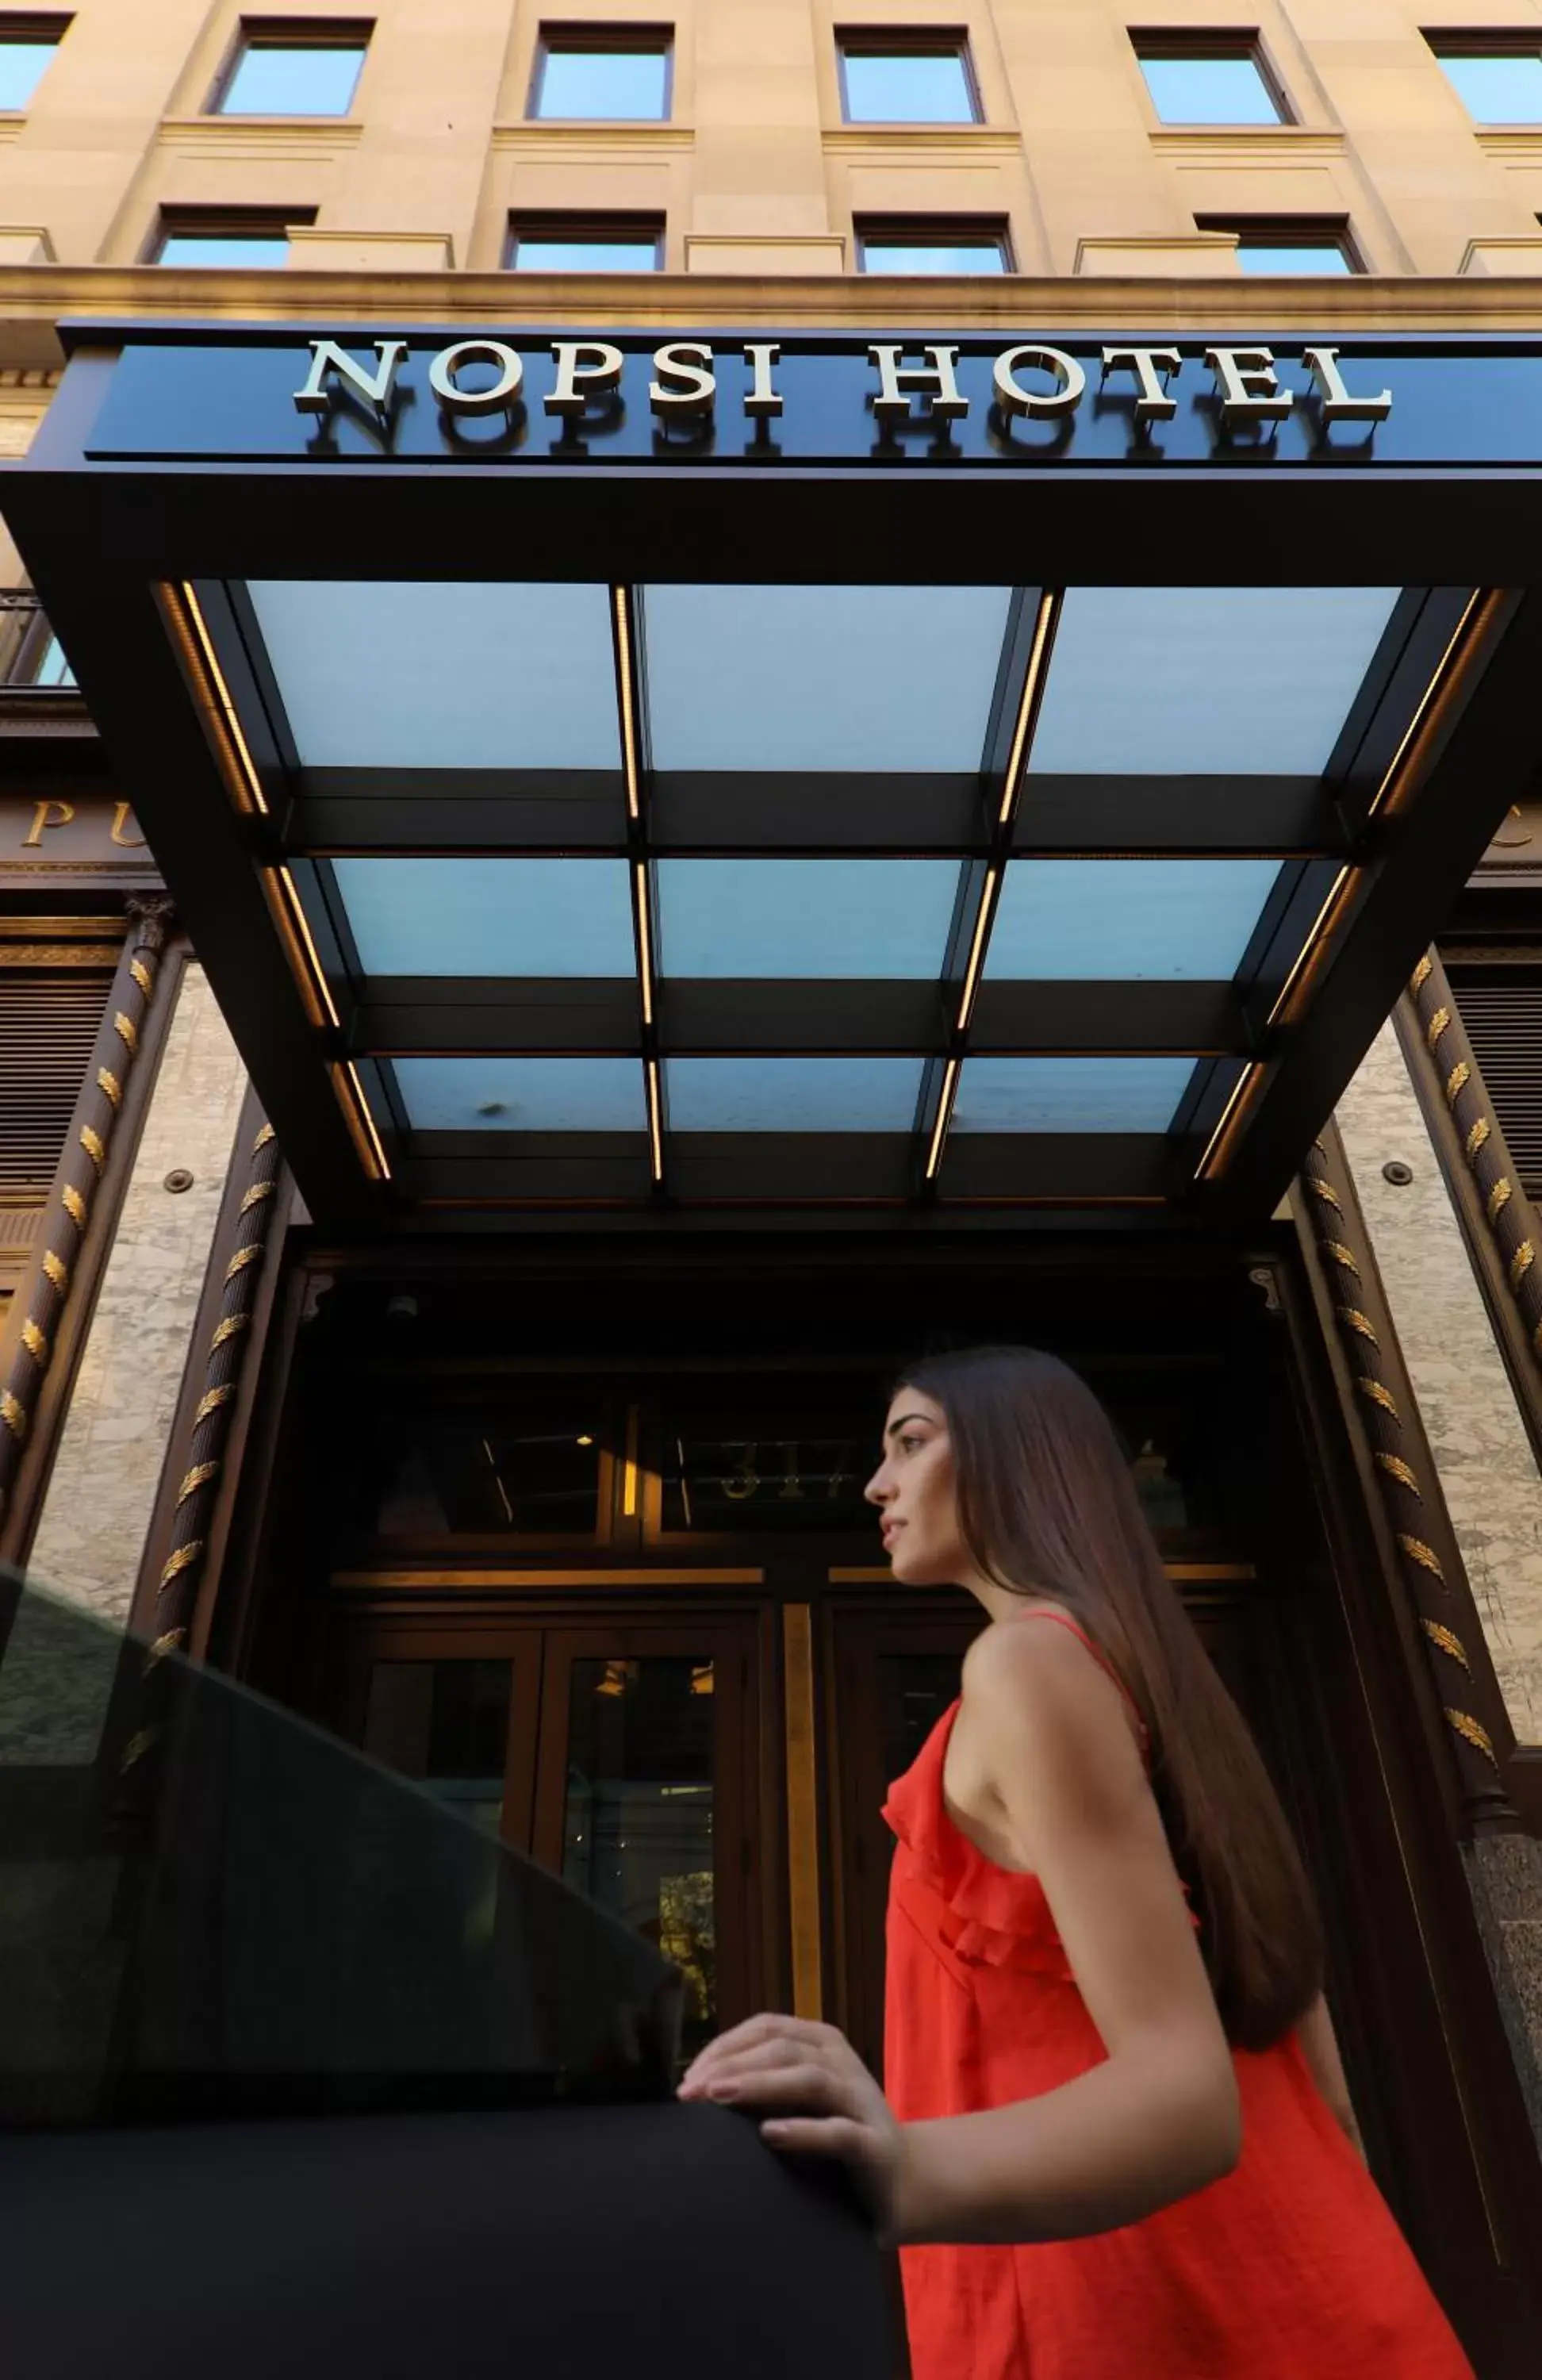 Facade/entrance in NOPSI Hotel New Orleans